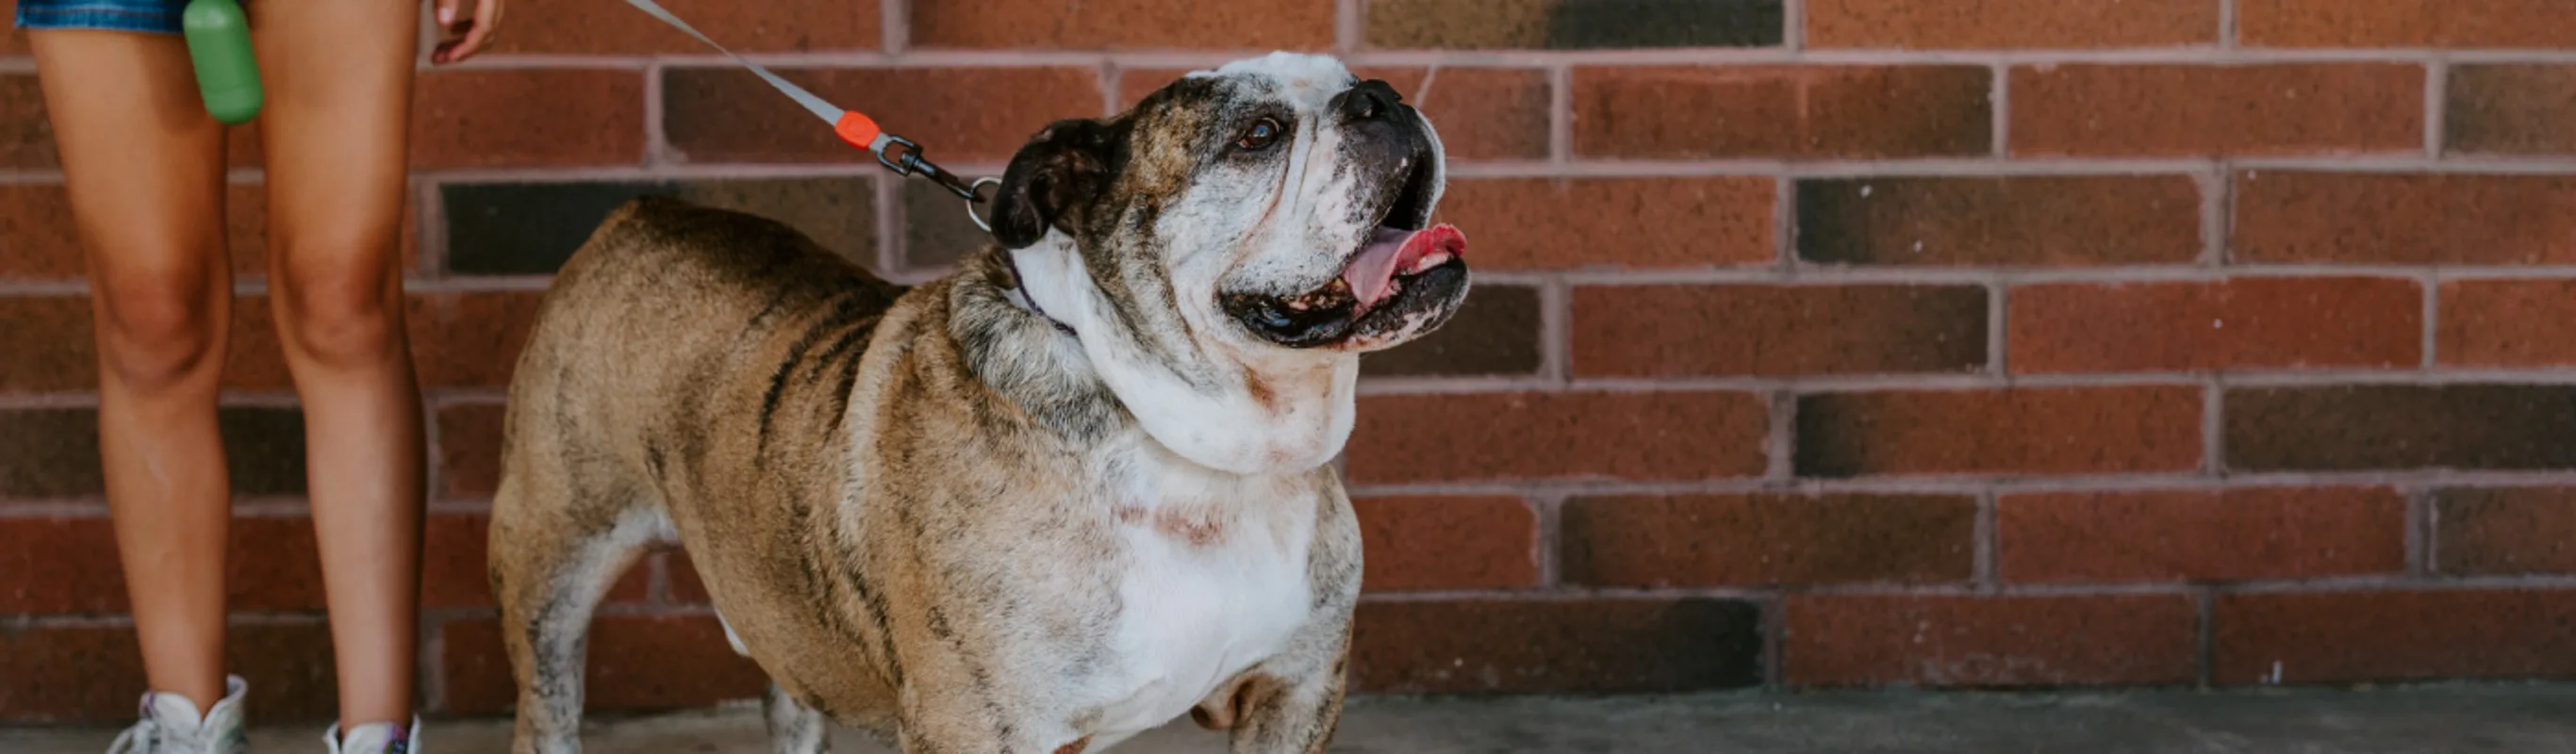 Bulldog on leash at Arroyo Vista Veterinary Hospital